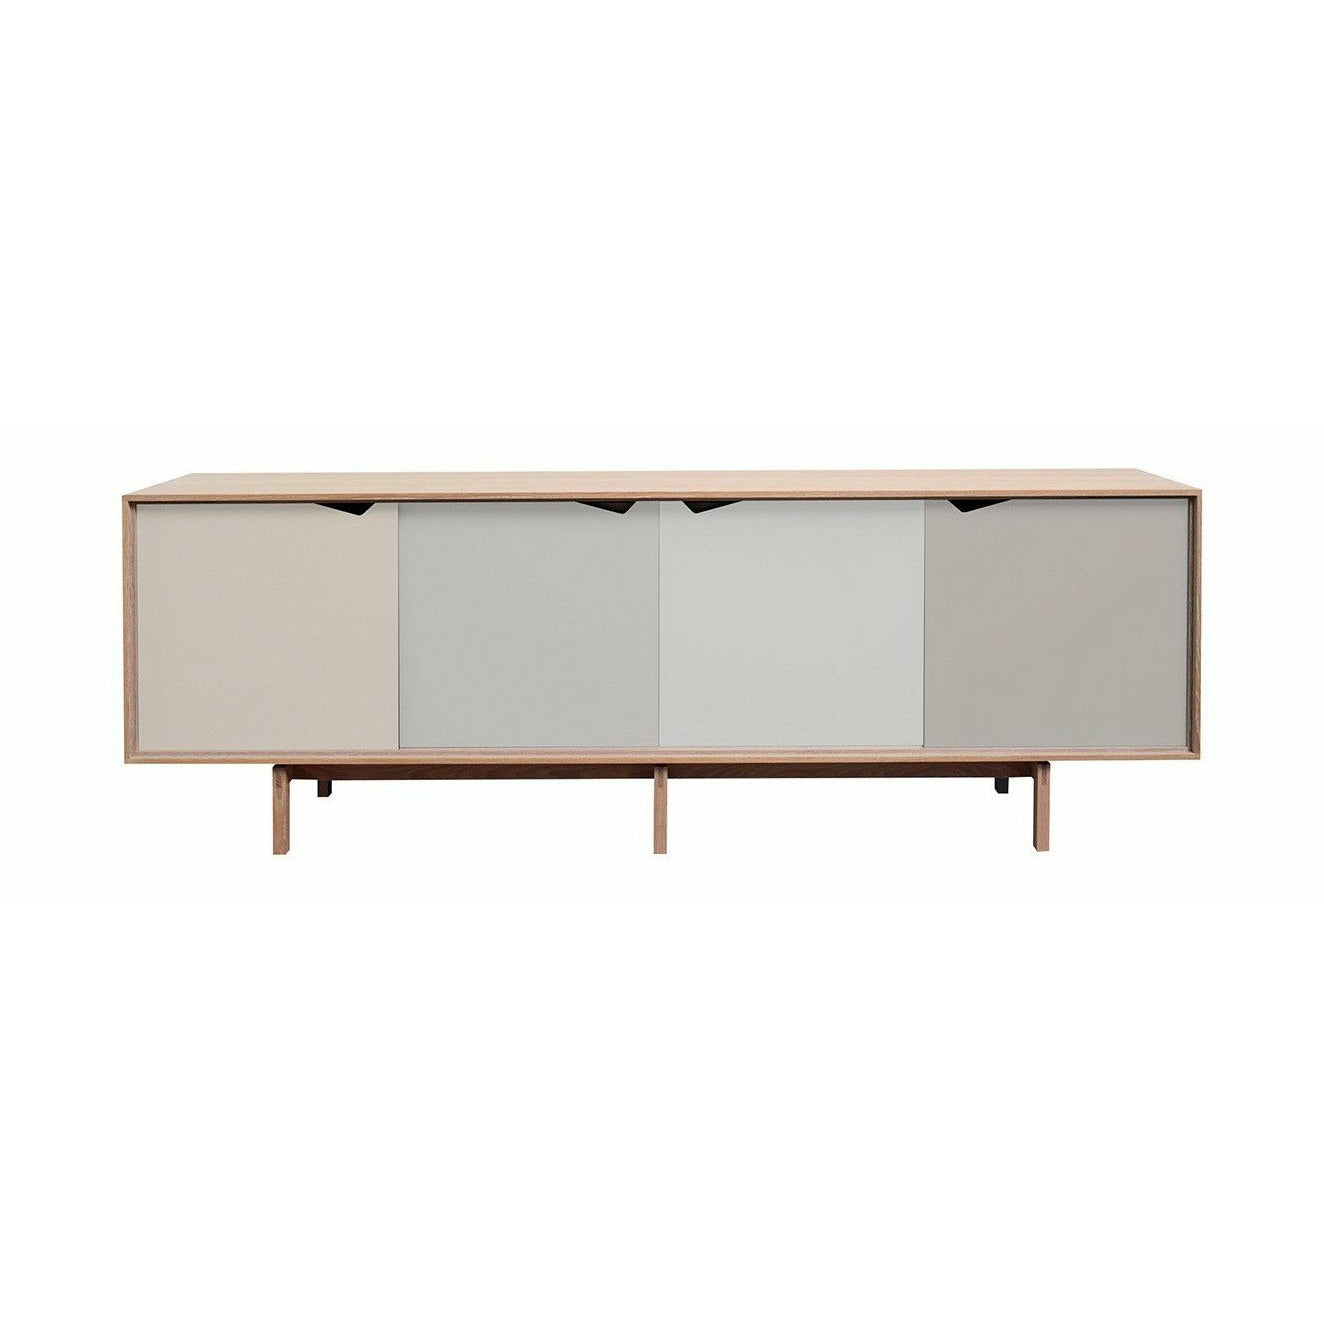 Andersen Furniture S1 skjenk såpe eik, flerfargede skuffer, 200 cm